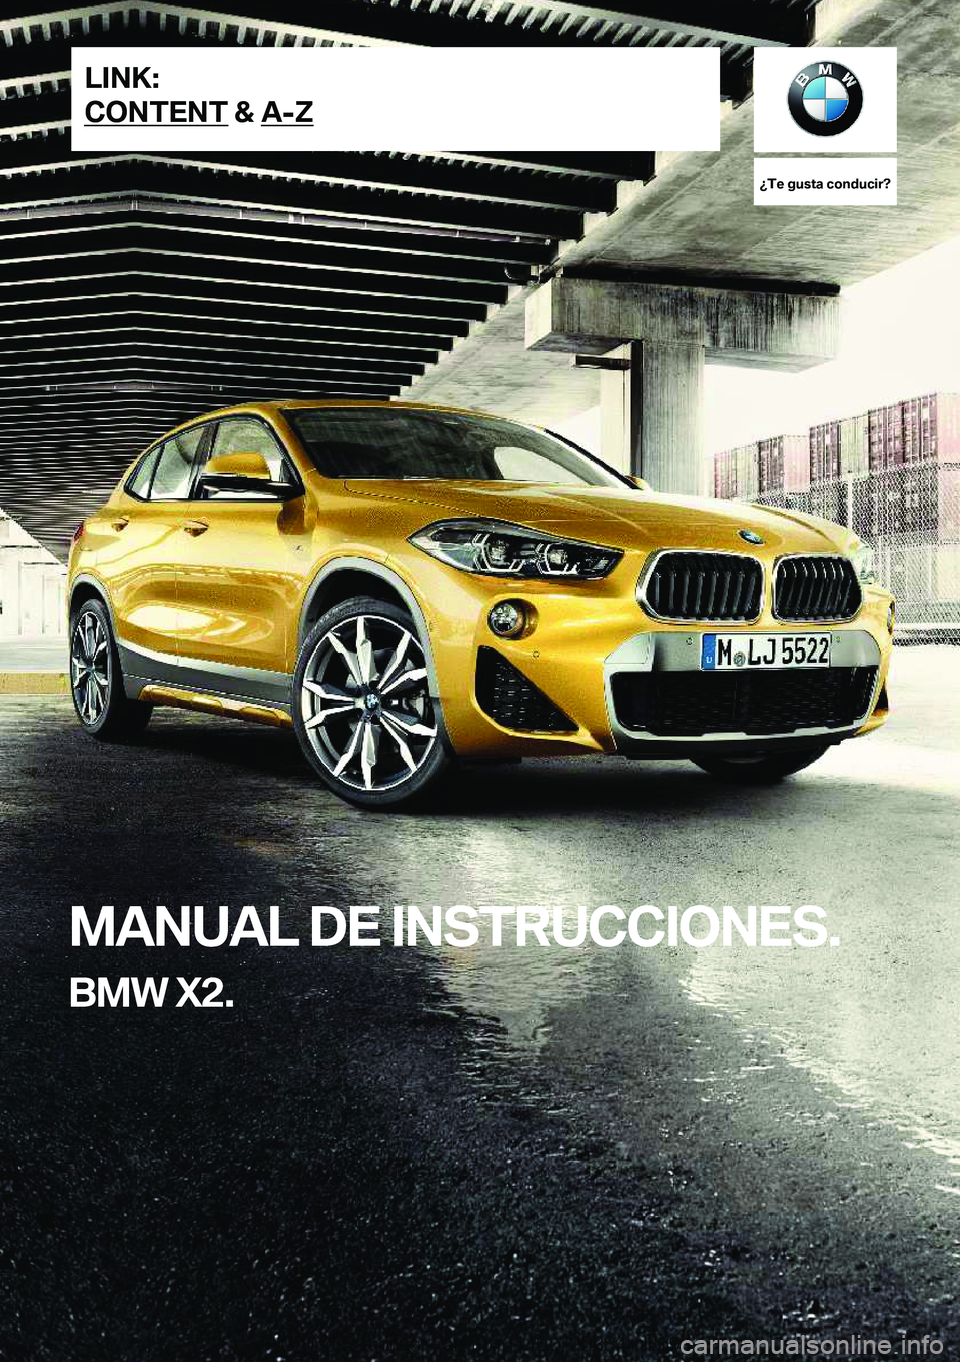 BMW X2 2019  Manuales de Empleo (in Spanish) ��T�e��g�u�s�t�a��c�o�n�d�u�c�i�r� 
�M�A�N�U�A�L��D�E��I�N�S�T�R�U�C�C�I�O�N�E�S�.
�B�M�W��X�2�.�L�I�N�K�:
�C�O�N�T�E�N�T��&��A�-�Z�O�n�l�i�n�e��E�d�i�t�i�o�n��f�o�r��P�a�r�t��n�o�.��0�1�